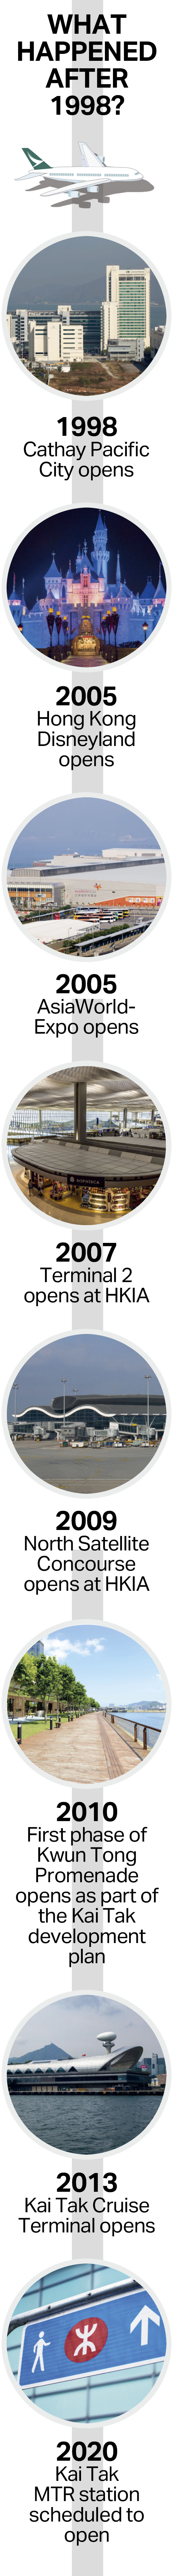 Hong Kong International Airport timeline